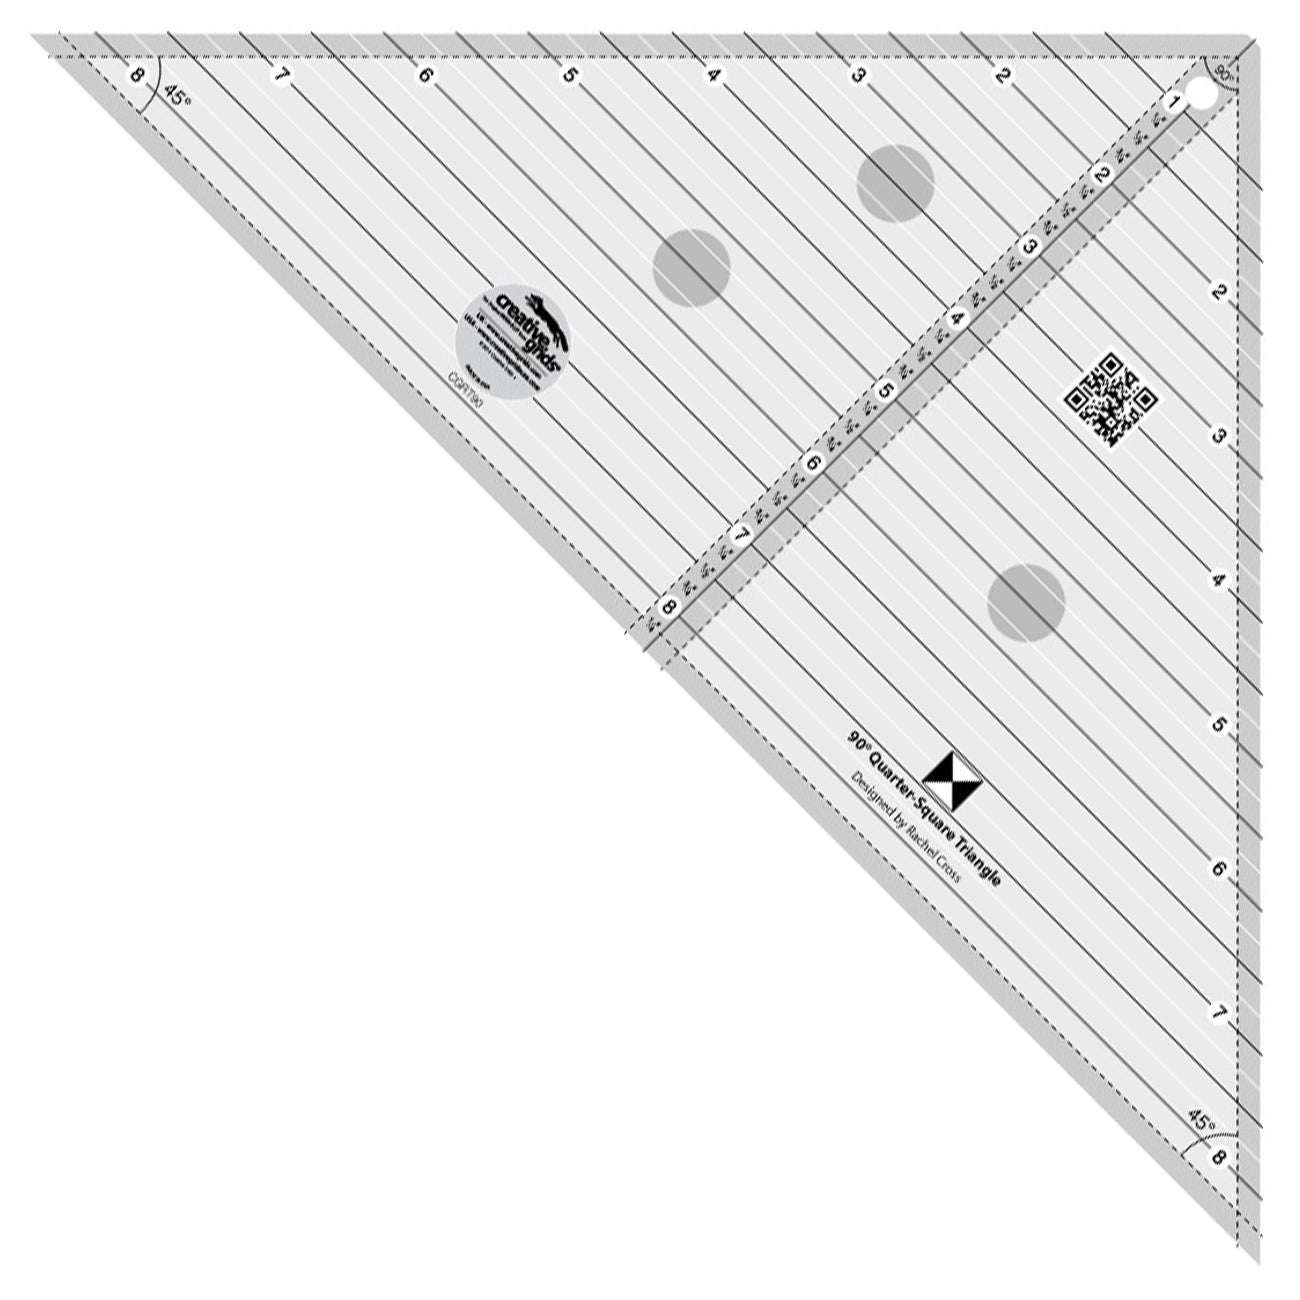 Creative Grids 90 Degree Quarter-Square Triangle Quilt Ruler (CGRT90)